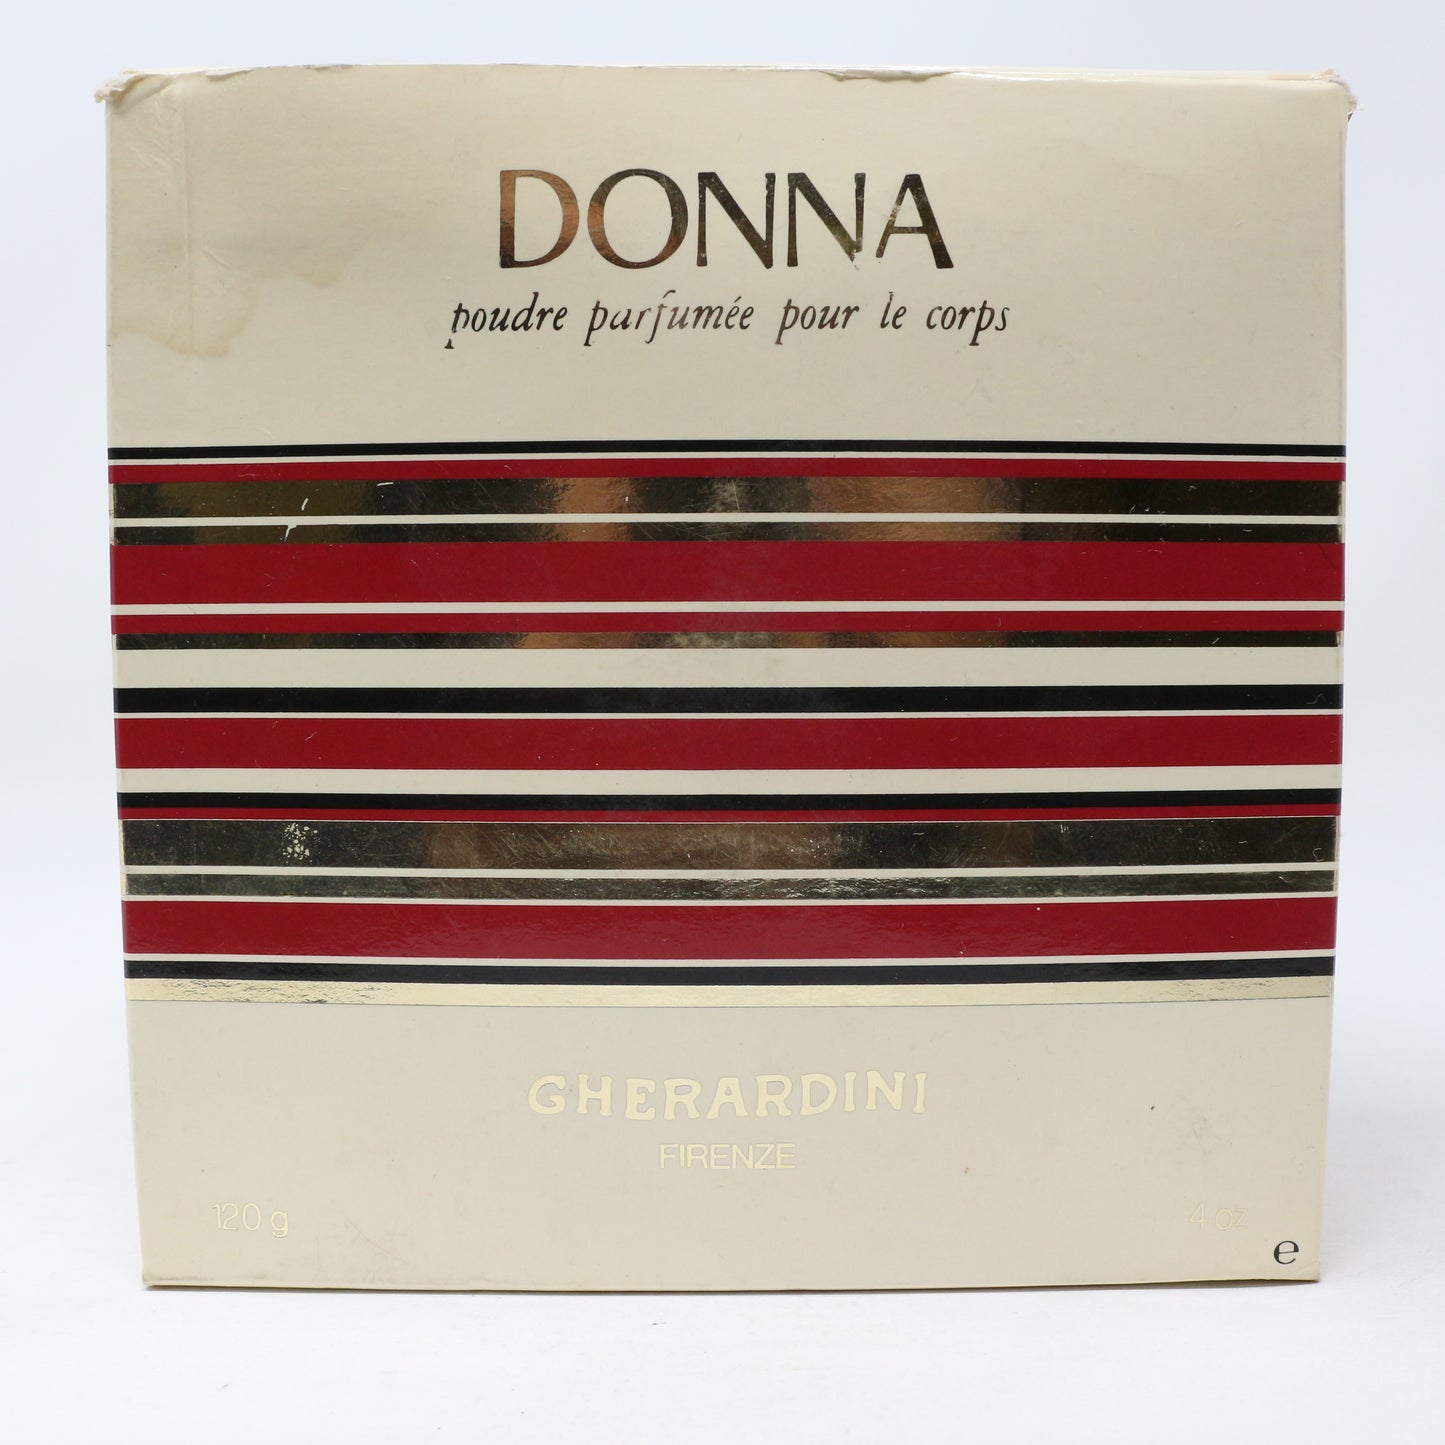 Gherardini Donna Dusting Powder  4oz/120ml Vinatage